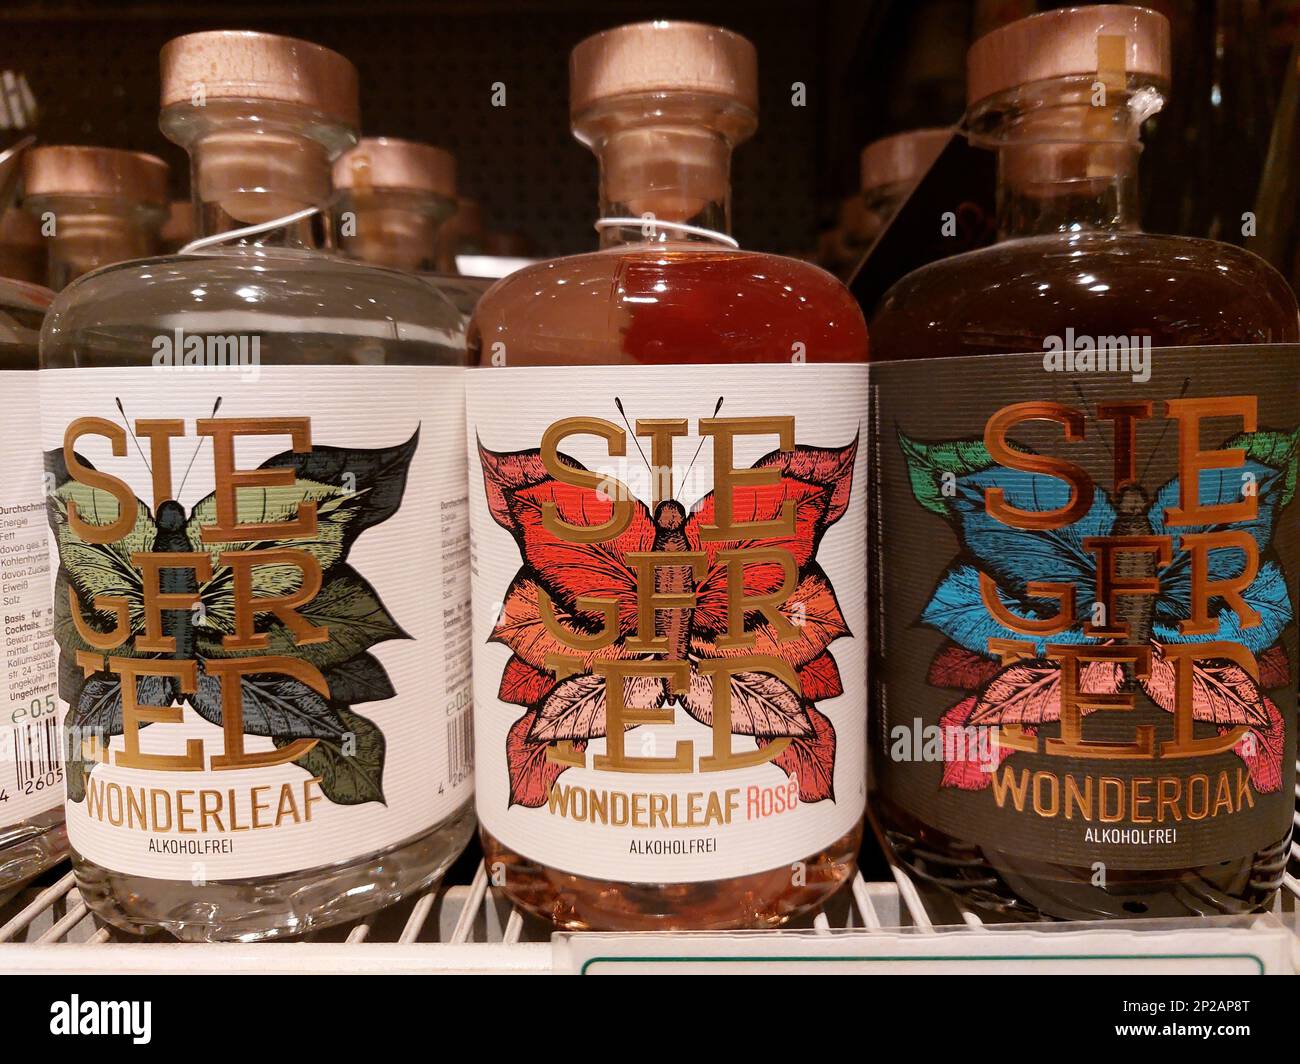 supermarket Alamy alcohol choice free Wonderoak by and bottles Photo - Wonderleaf of Stock in a Siegfried